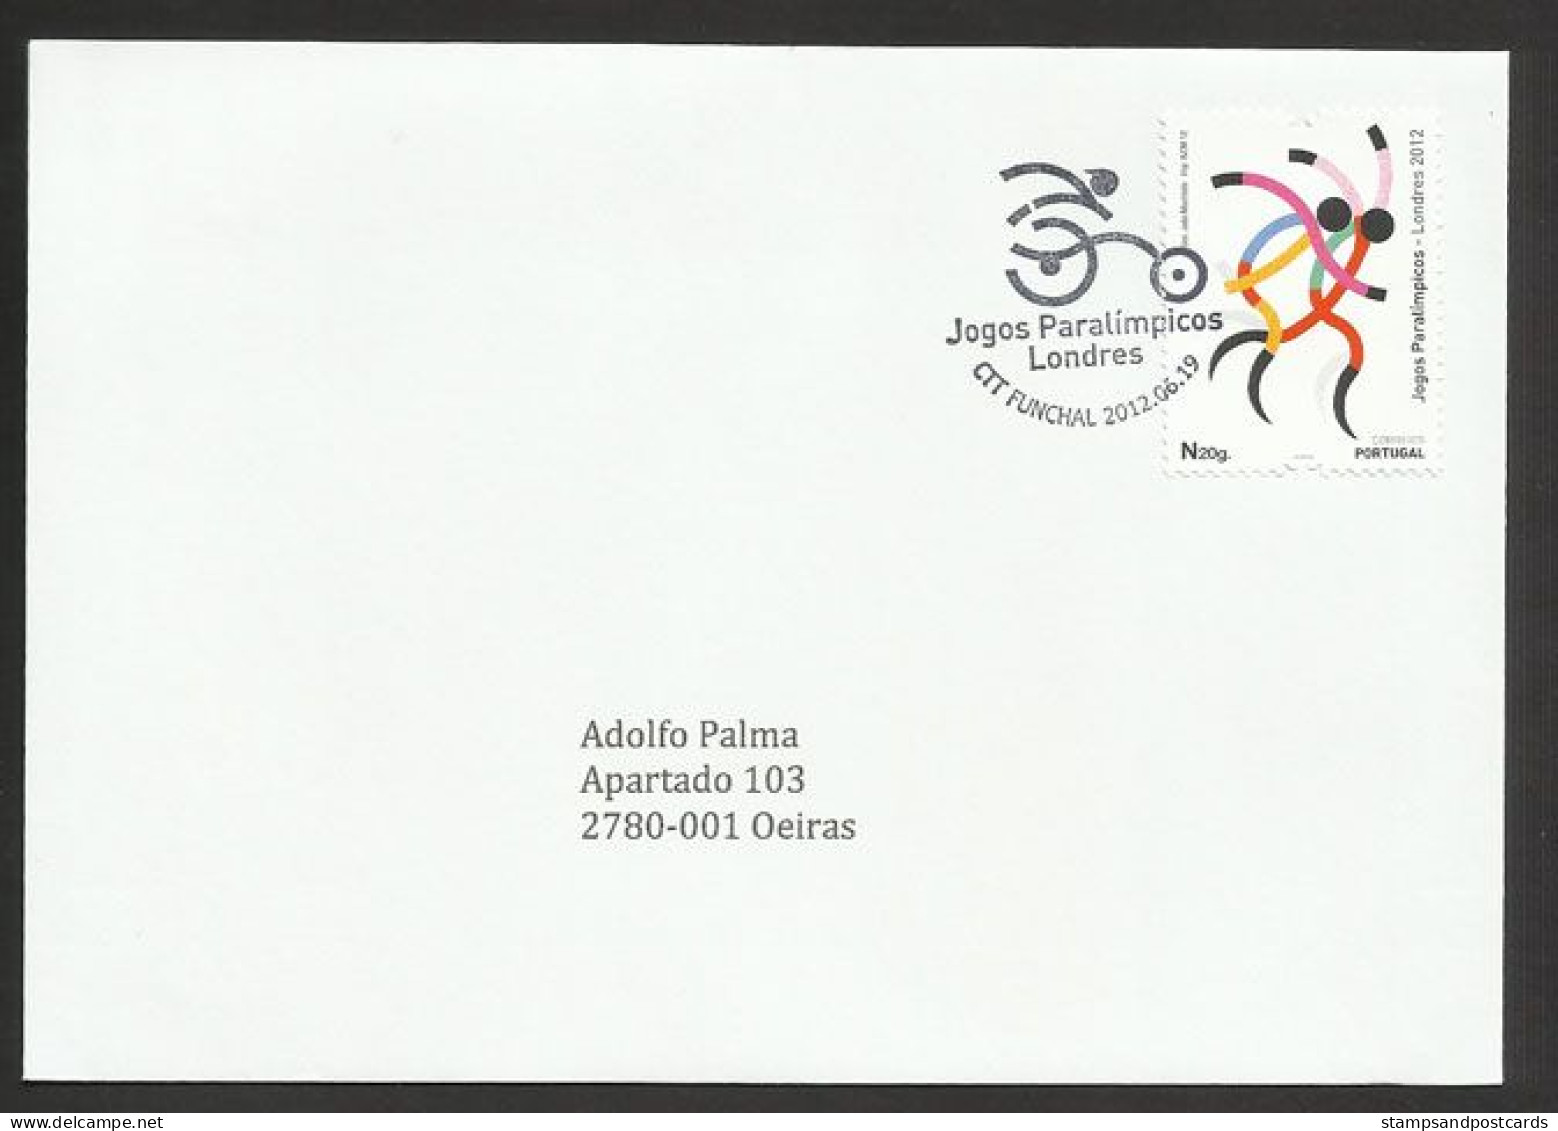 Portugal Jeux Paralympiques London 2012 FDC Cachet Madère Paralympic Games FDC Madeira Postmark - Eté 2012: Londres